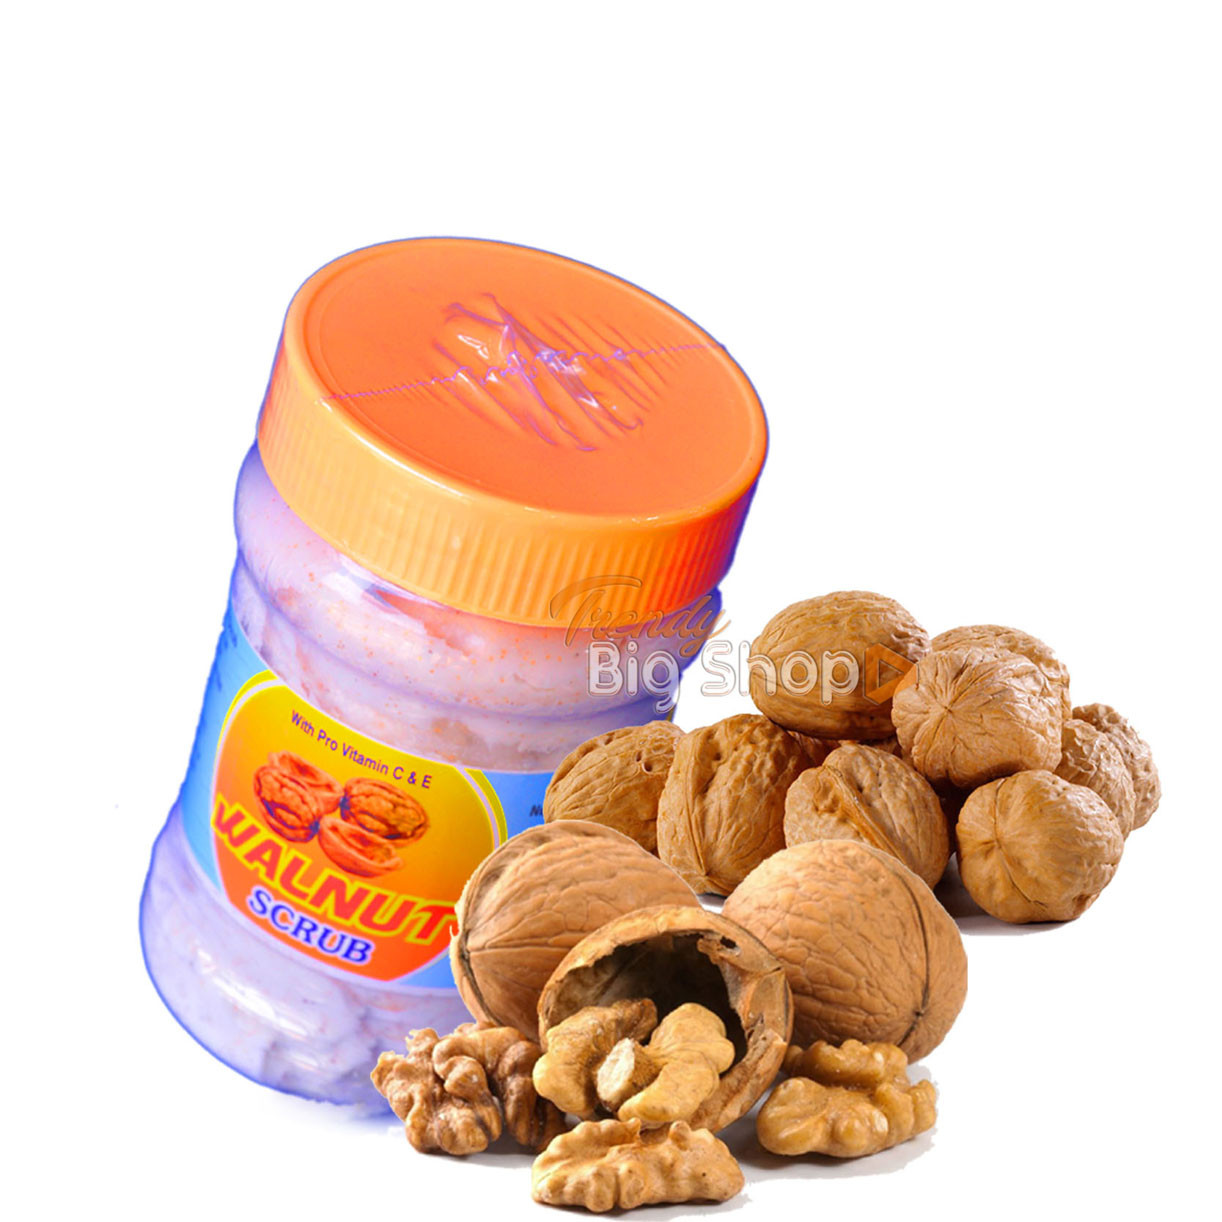 Walnut Face Scrub 250gm, Organic Walnut Product online shop